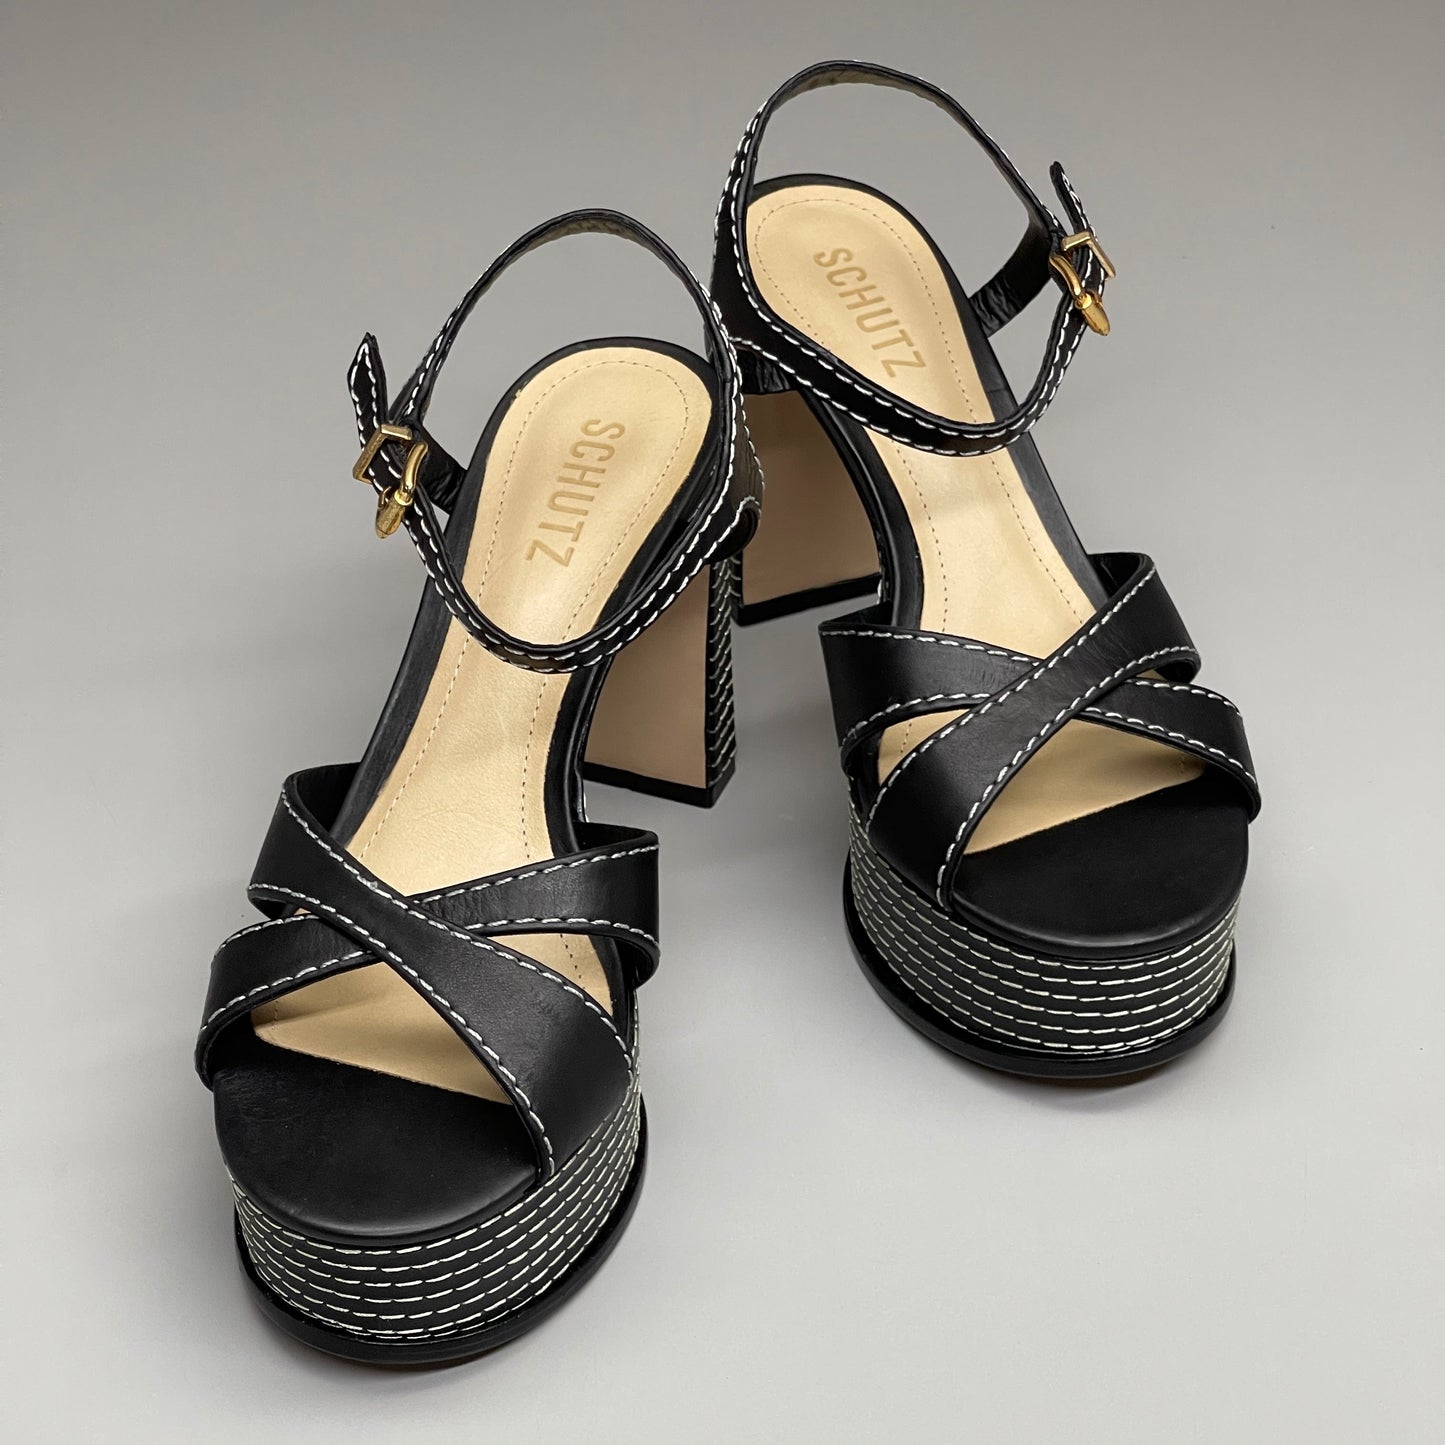 SCHUTZ Keefa Casual Women's Leather Sandal Black Platform 4" Heel Shoes Sz 6.5B (New)